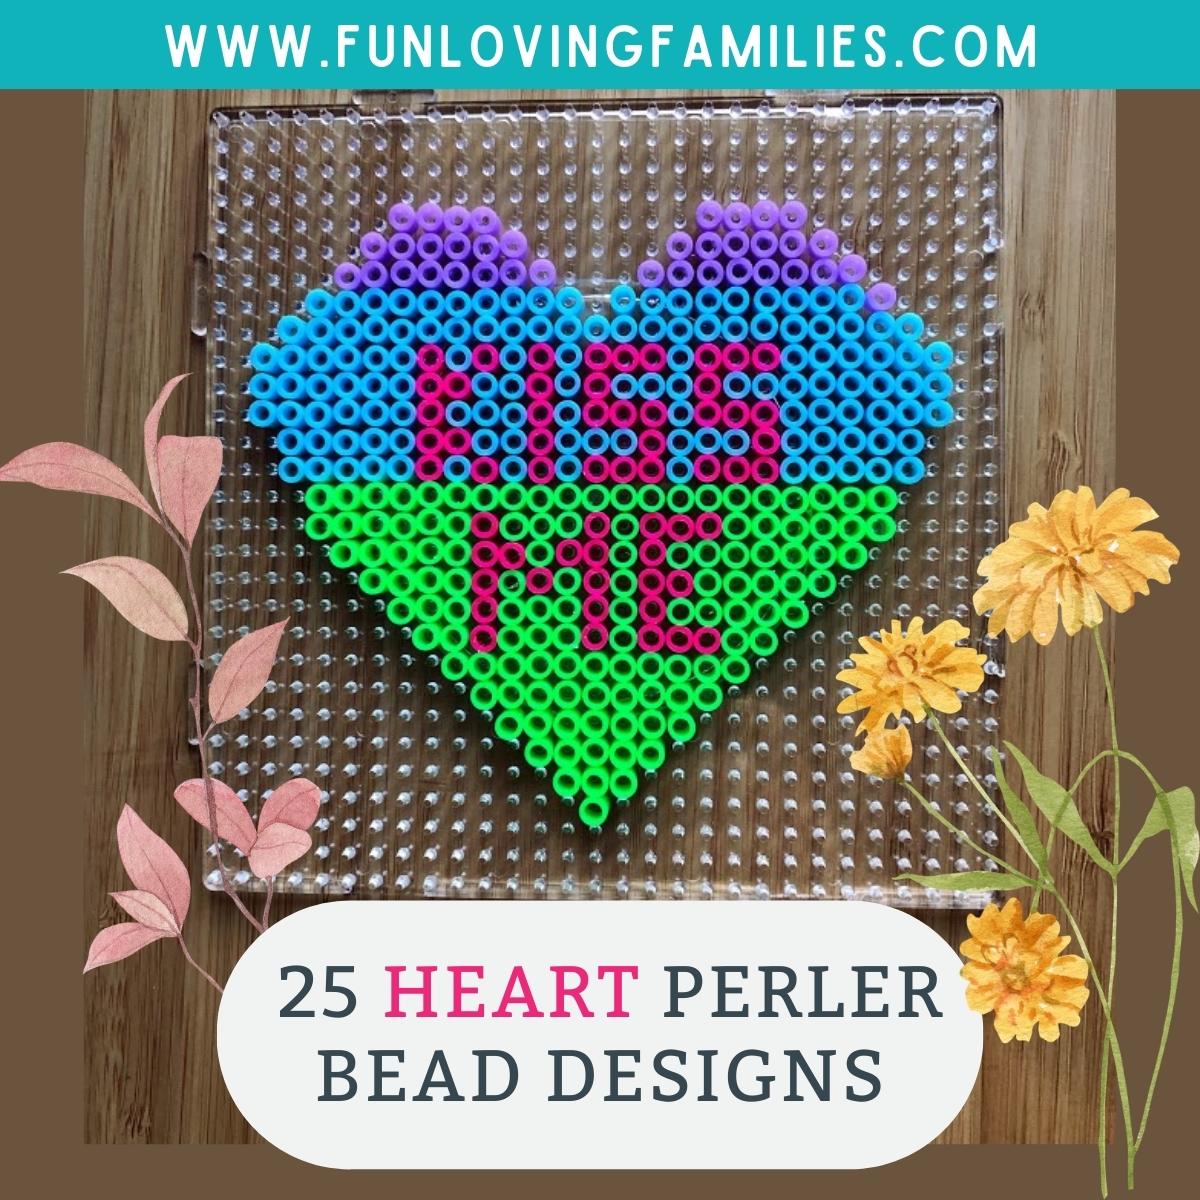 25 Heart Perler Bead Patterns, Designs and Ideas